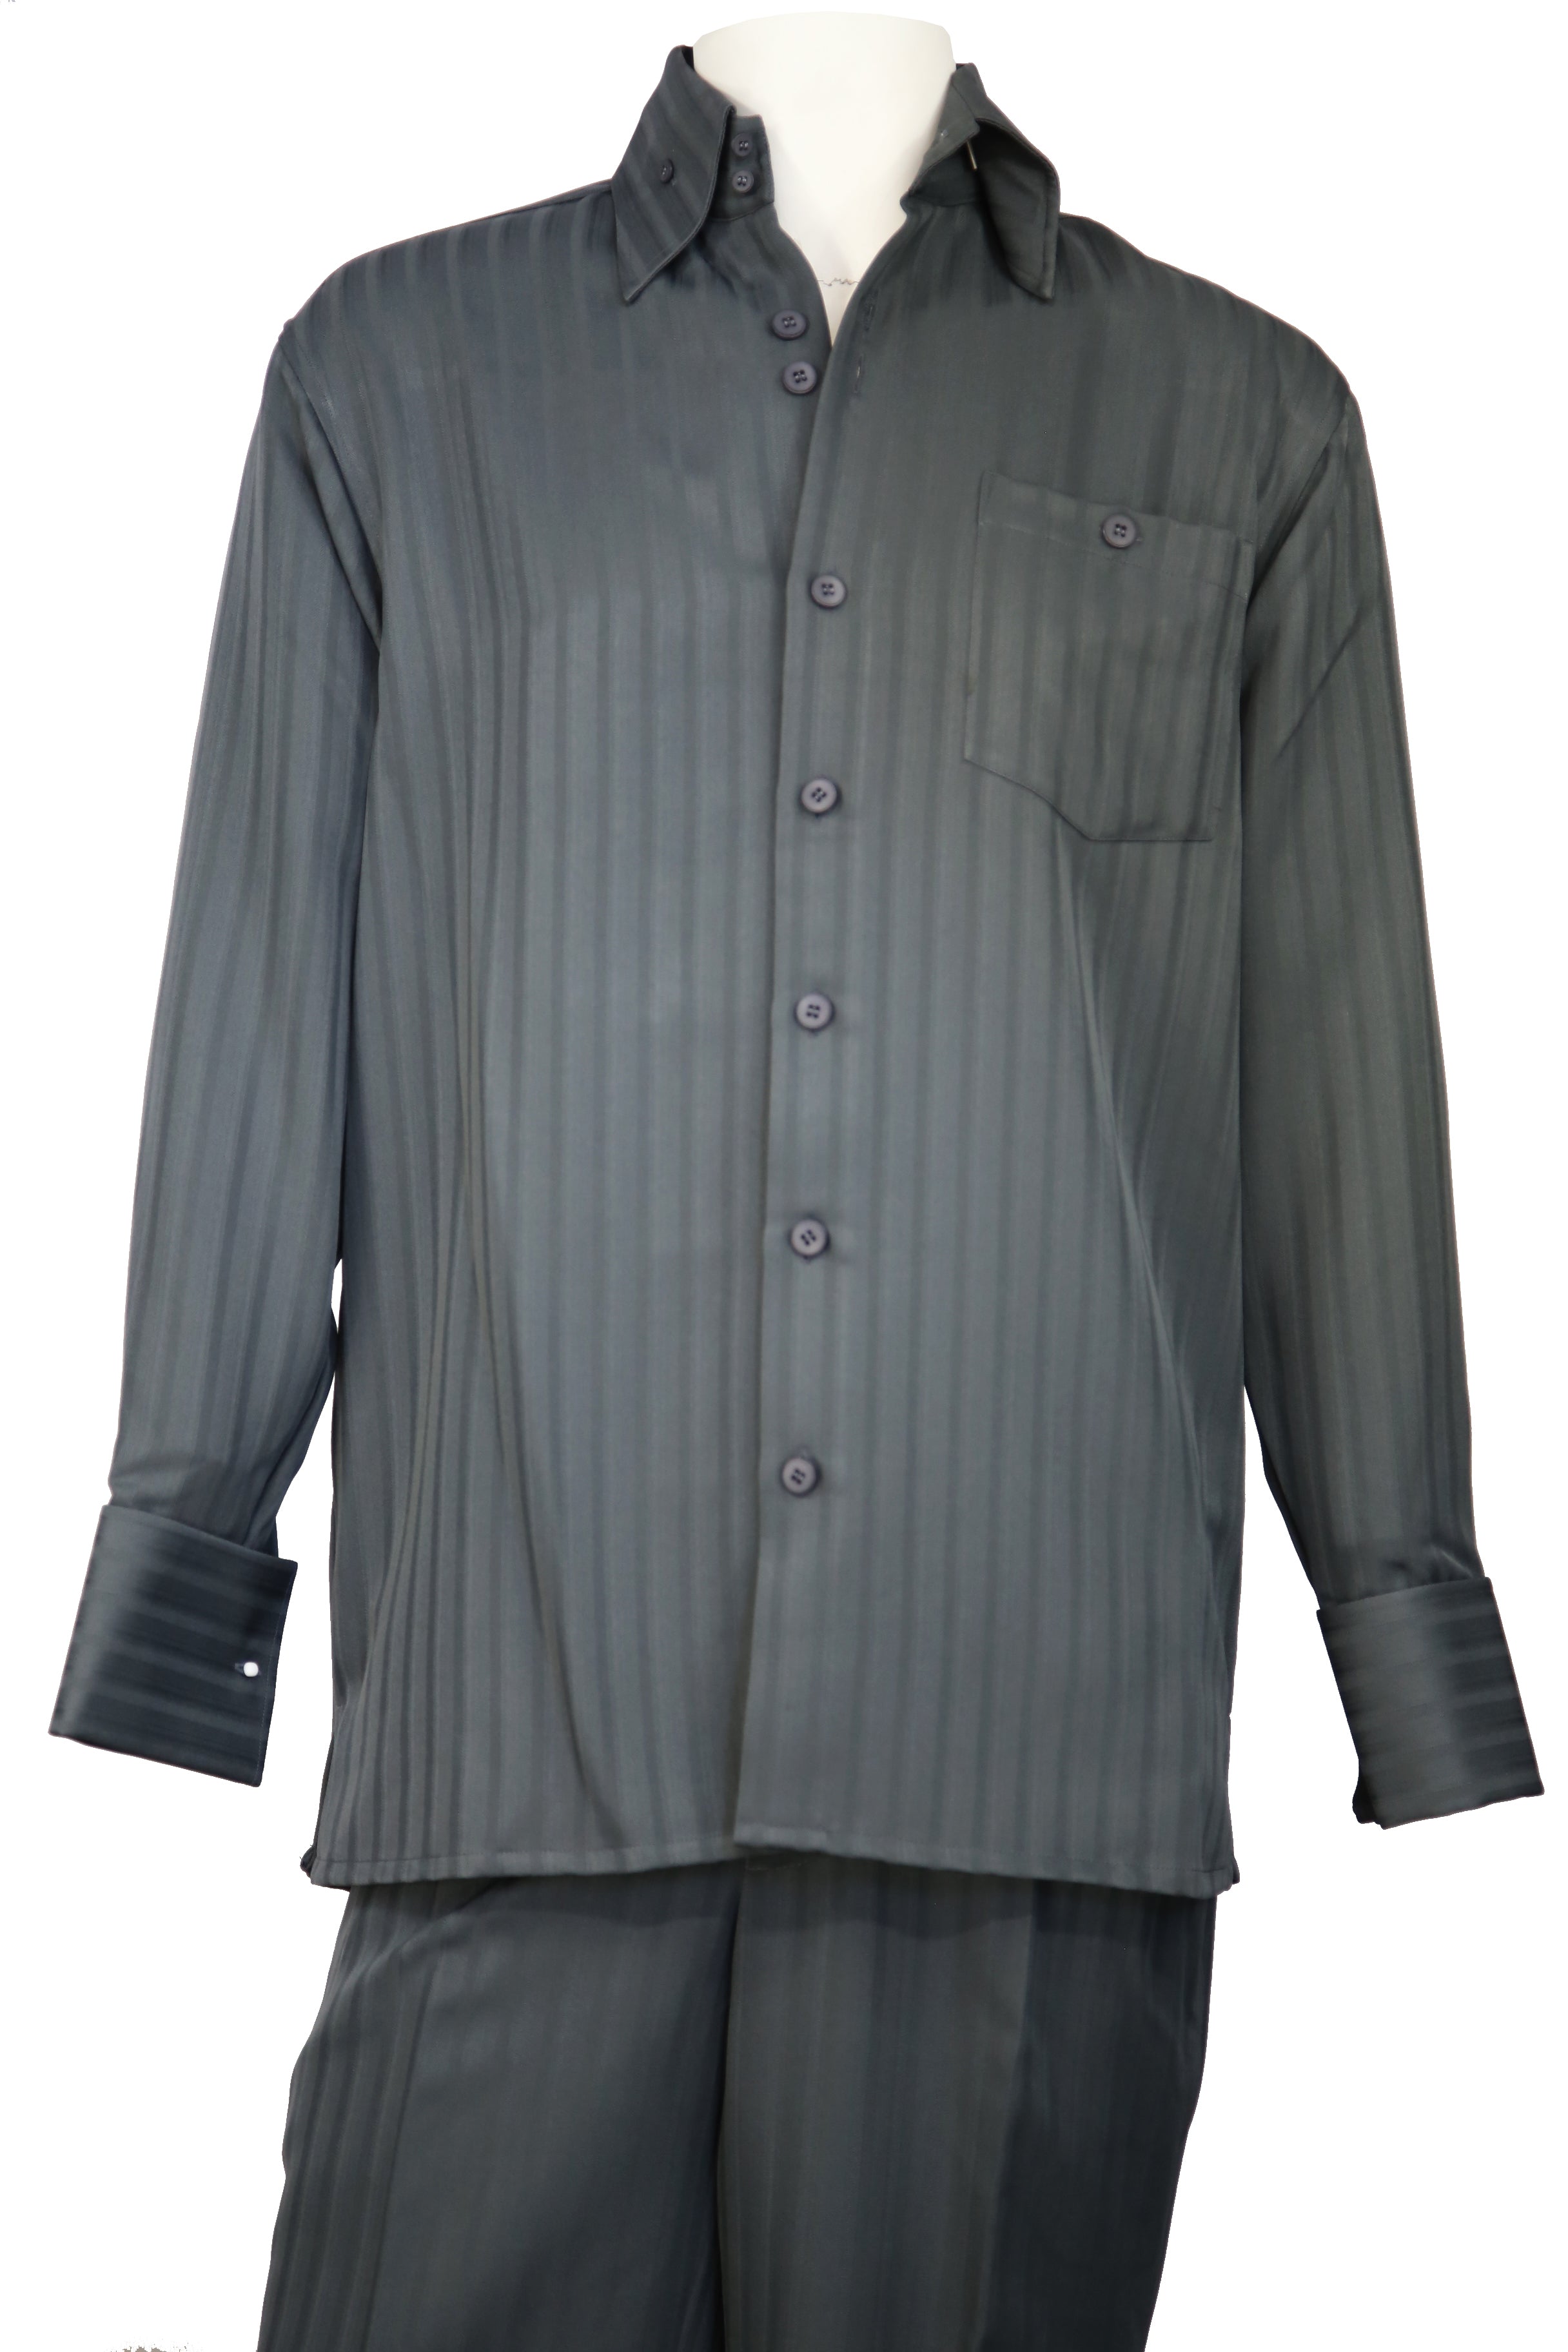 Cage Stripes Long Sleeve 2pc Walking Suit Set - Slate